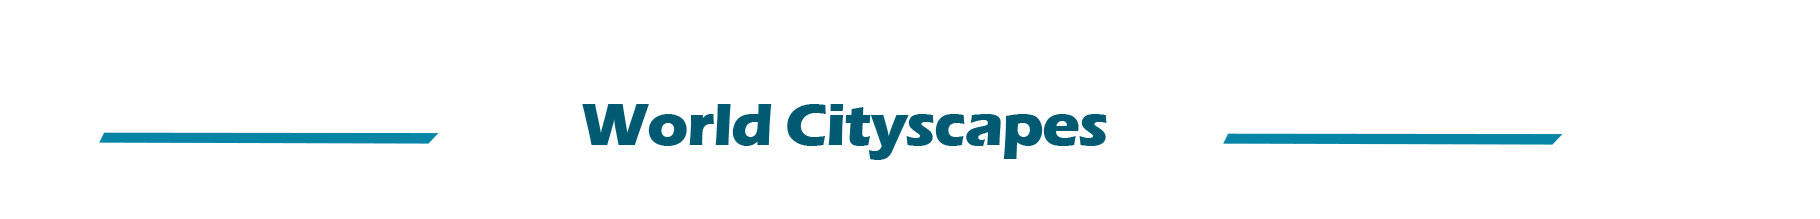 World Cityscapes